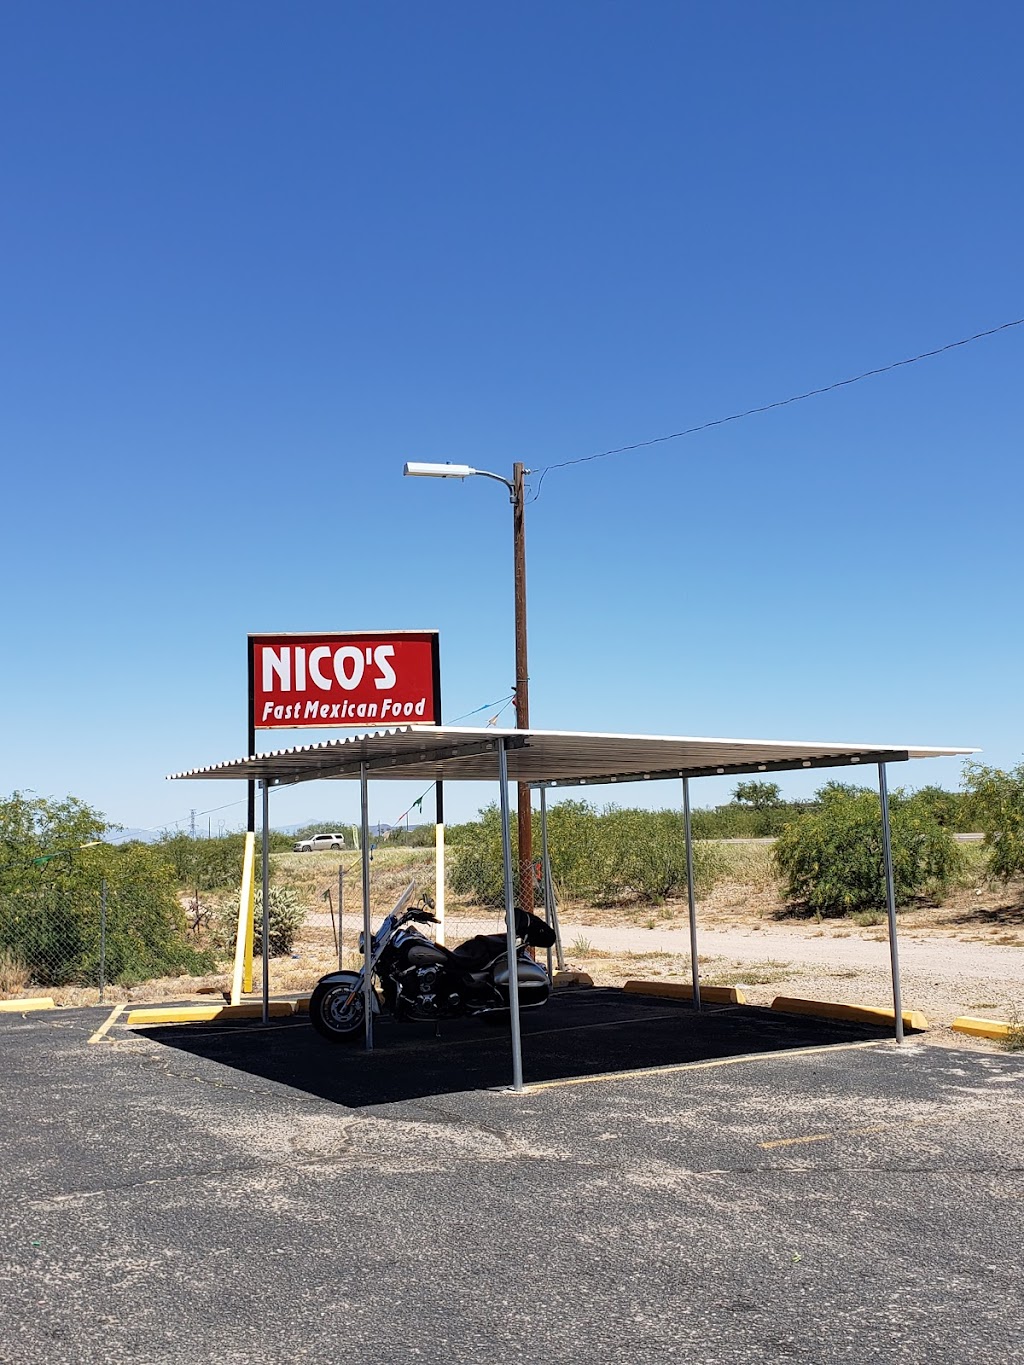 Nicos Taco Shop | 15270 W Ajo Hwy, Tucson, AZ 85735, USA | Phone: (520) 578-3610